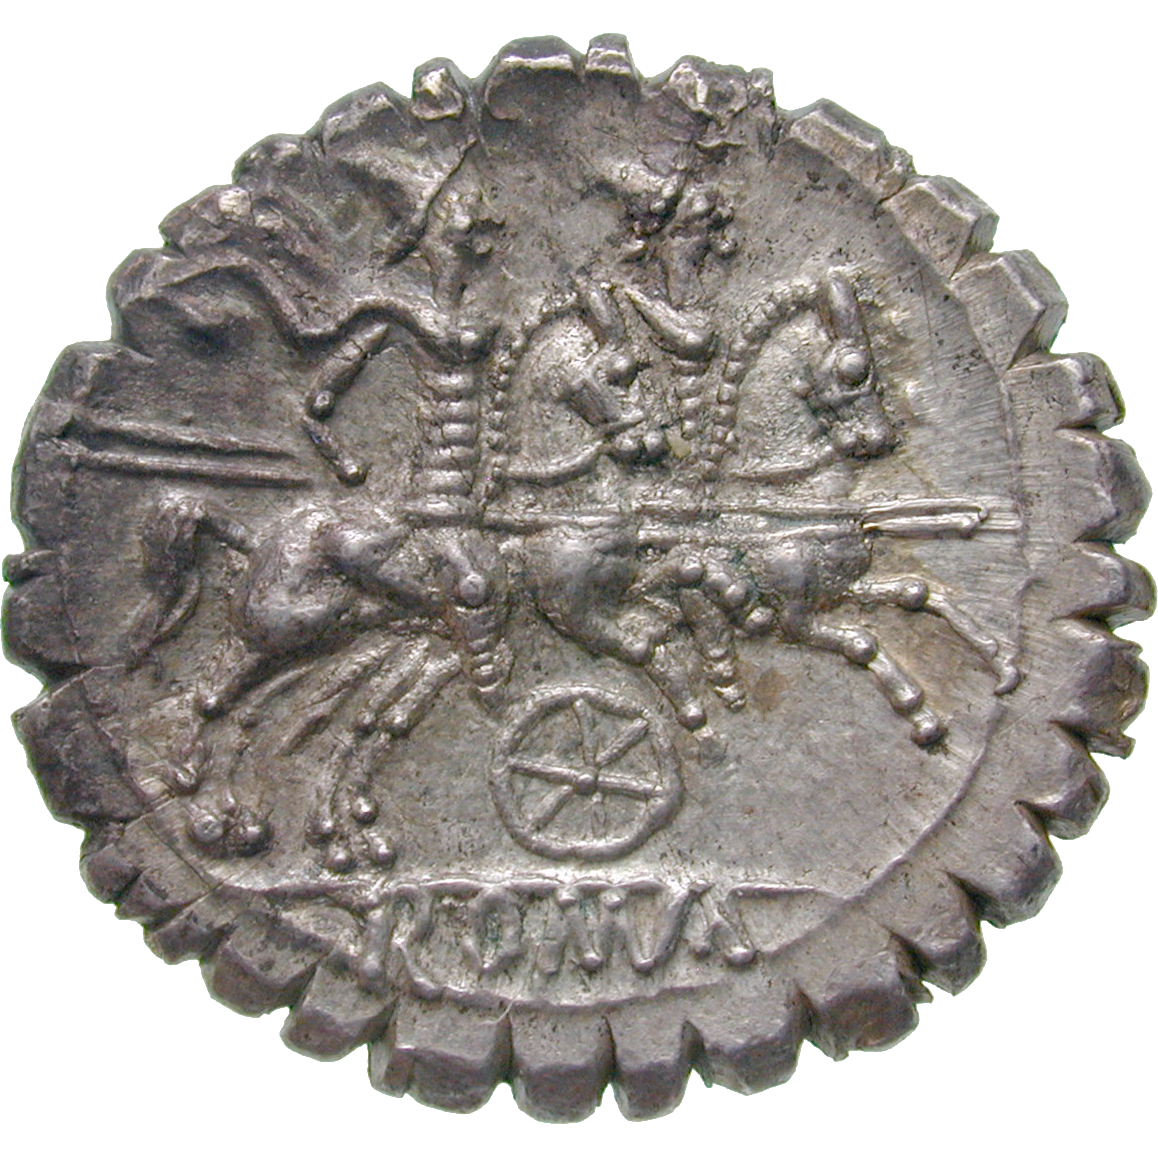 Roman Republic, Denarius Serratus (reverse)